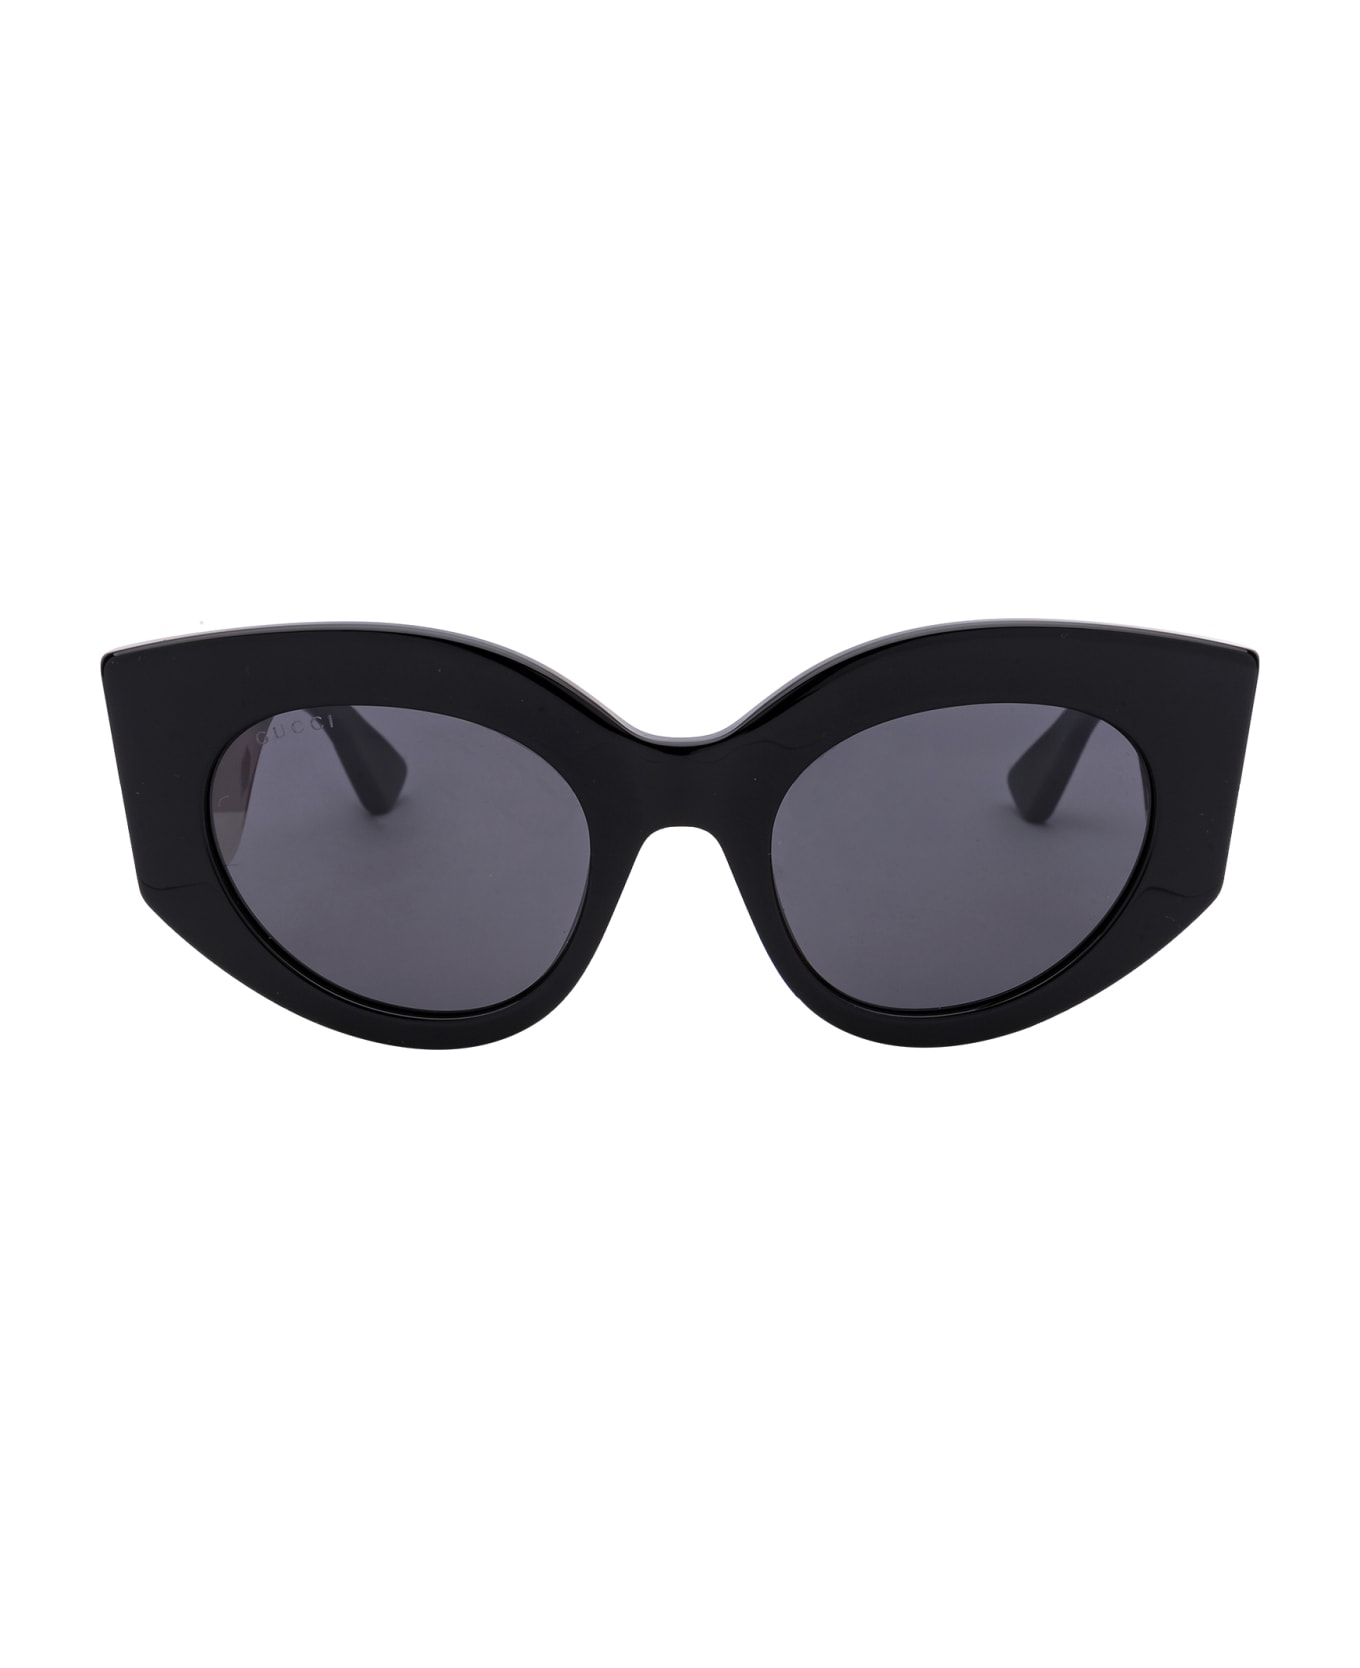 Gucci Eyewear Gg0275s Sunglasses - 001 BLACK MULTICOLOR GREY サングラス